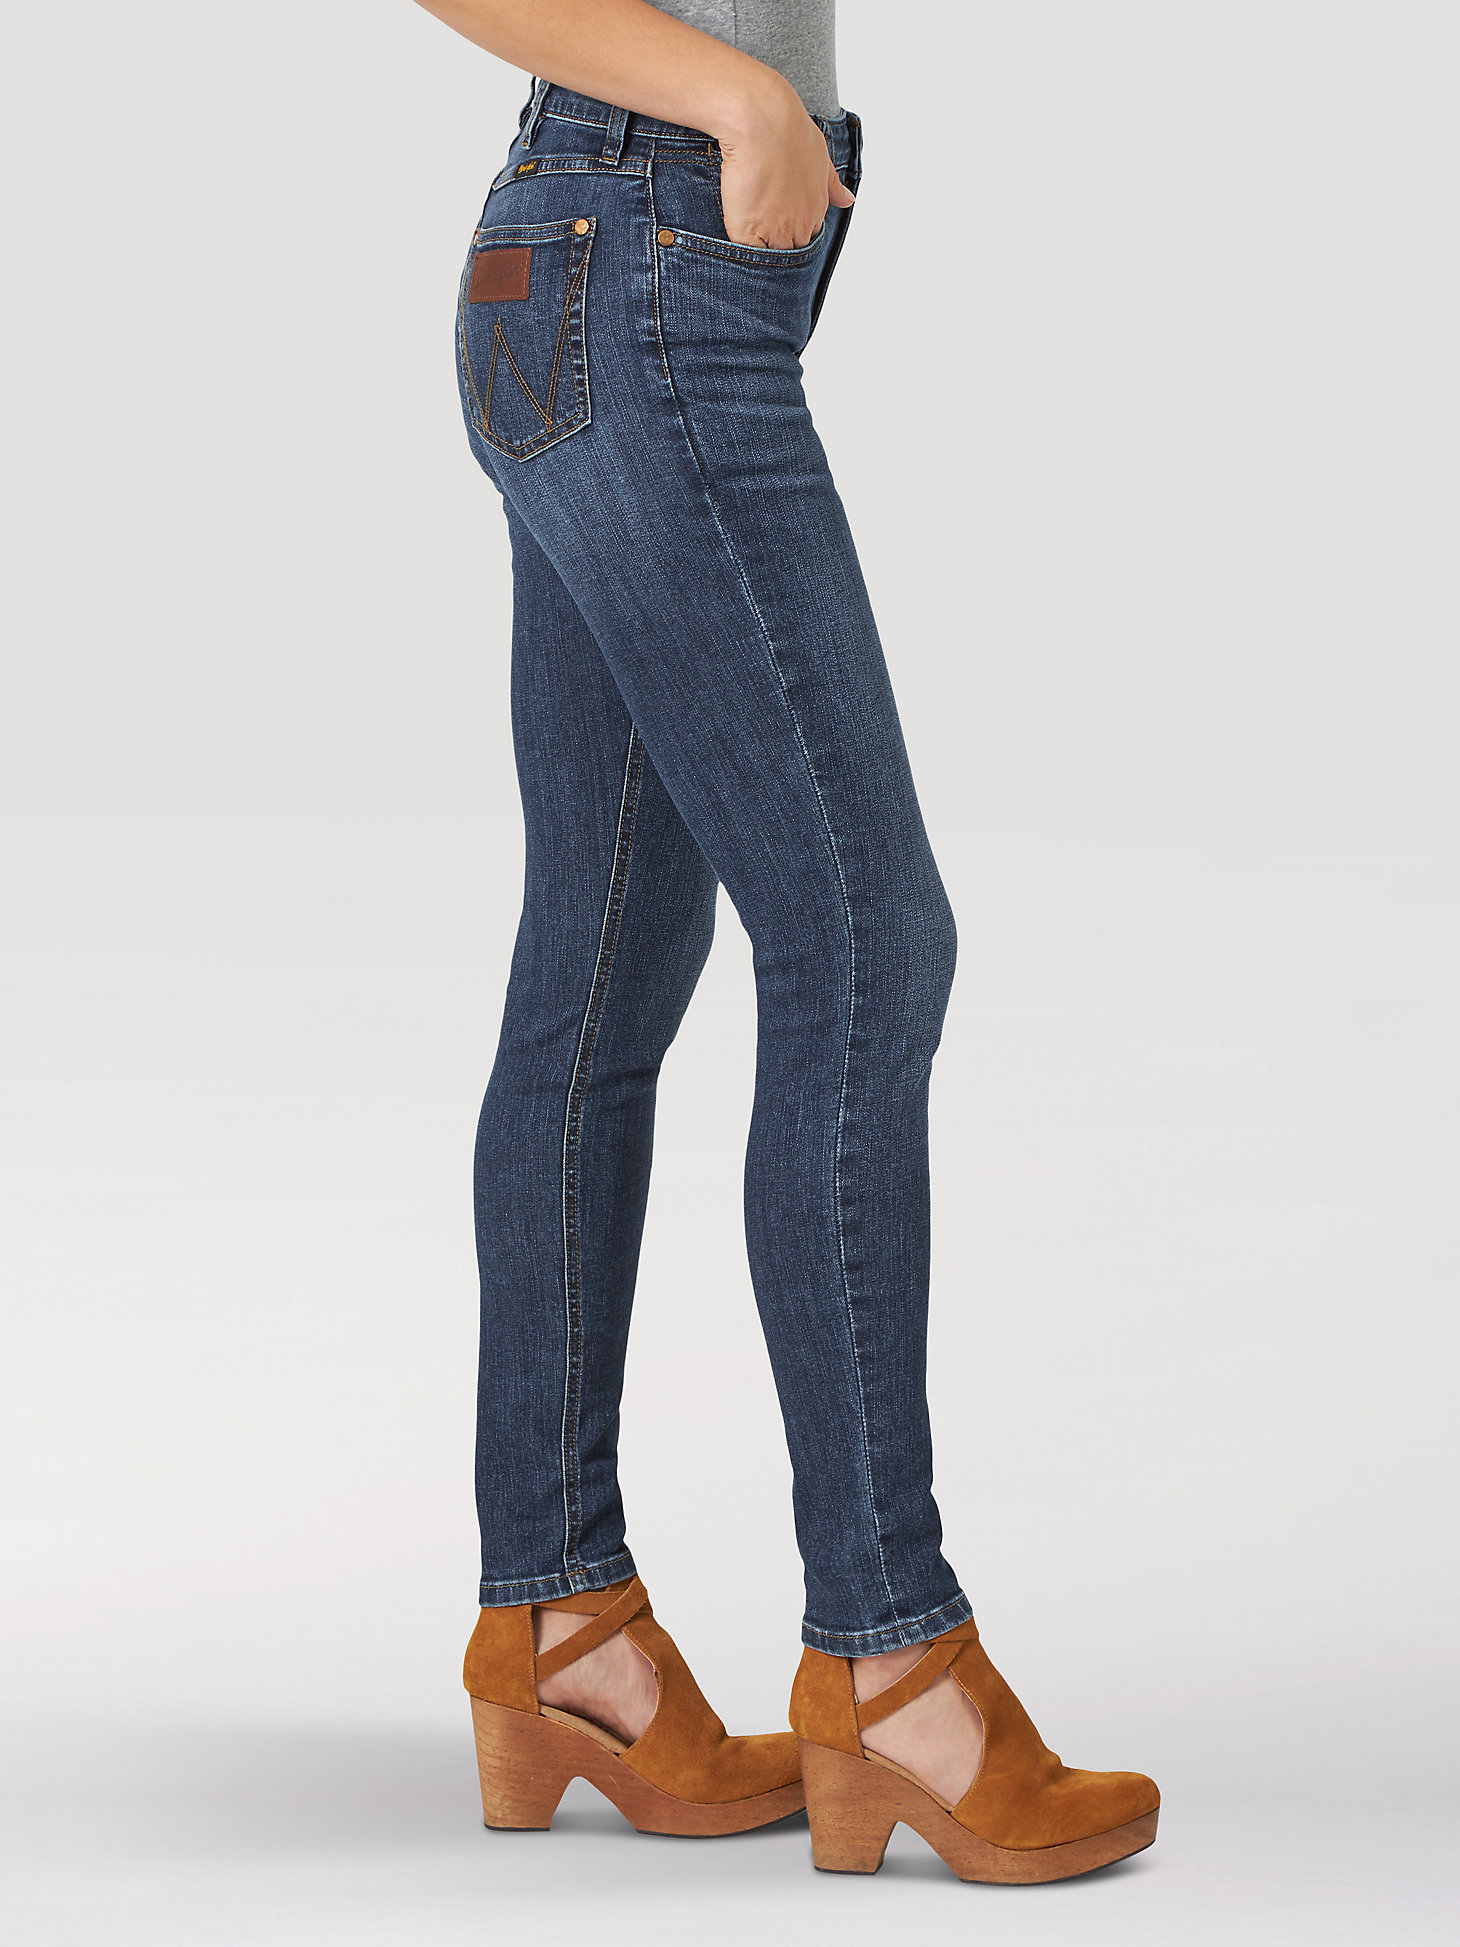 Wrangler Womens Retro Skinny Jeans 